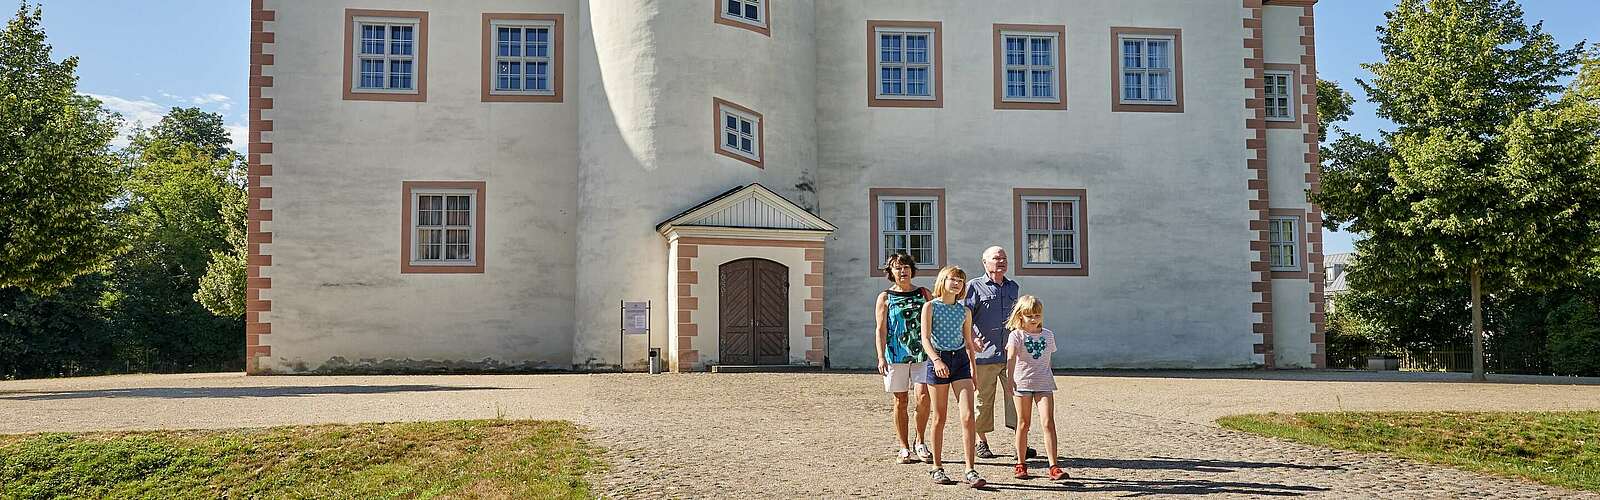 Familie vor Schloss Königs Wusterhausen,
        
    

        Foto: TMB-Fotoarchiv/Florian Trykowski